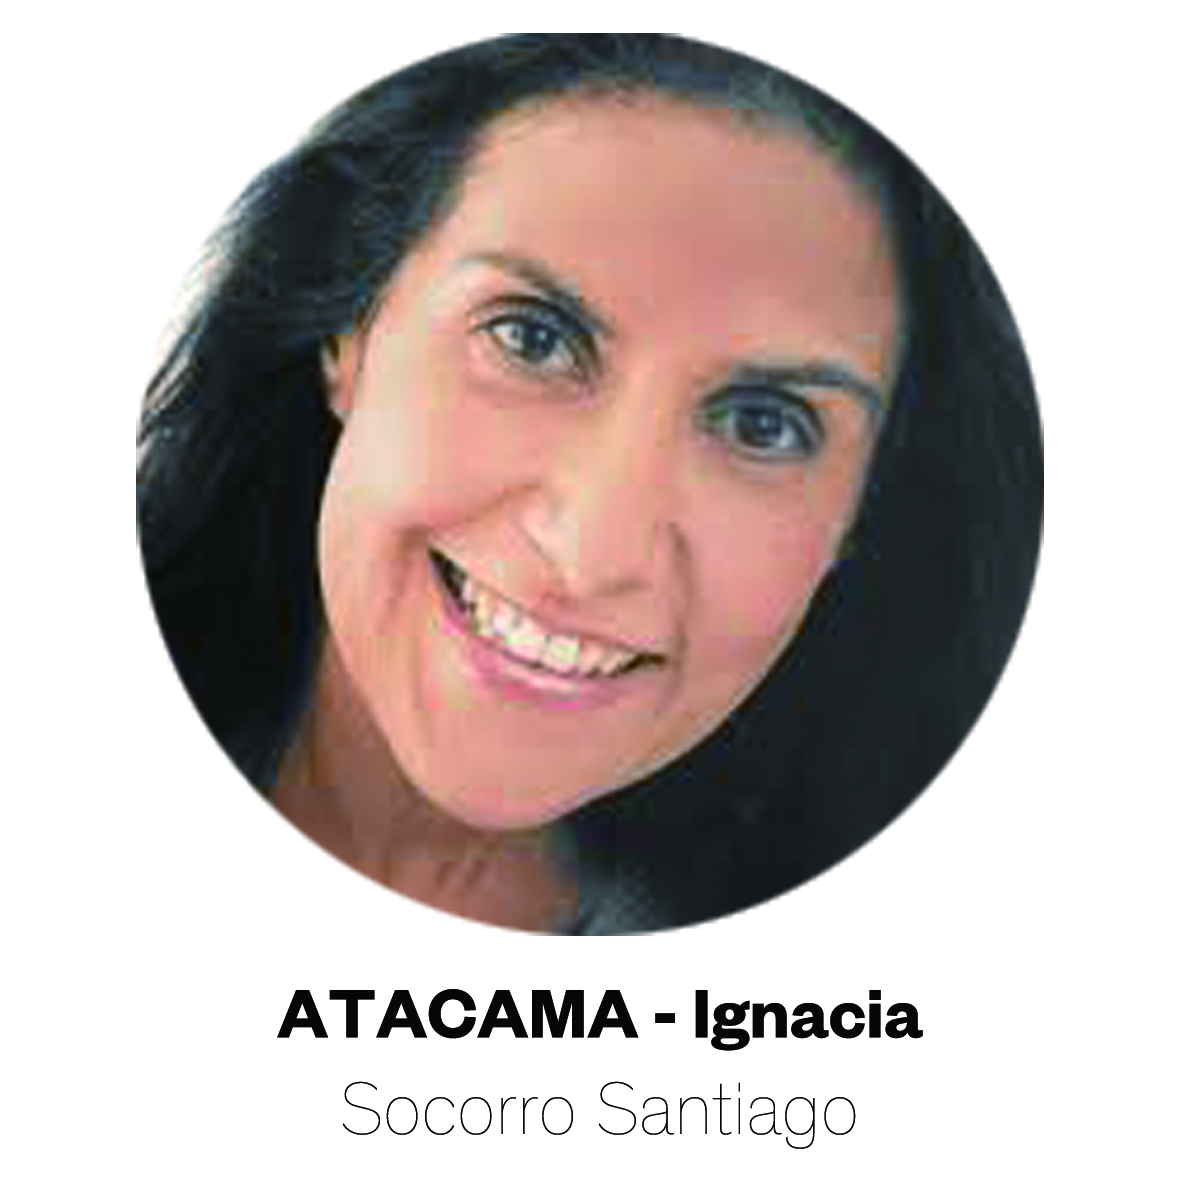 Socorro Santiago headshot - playing the role of Ignacia